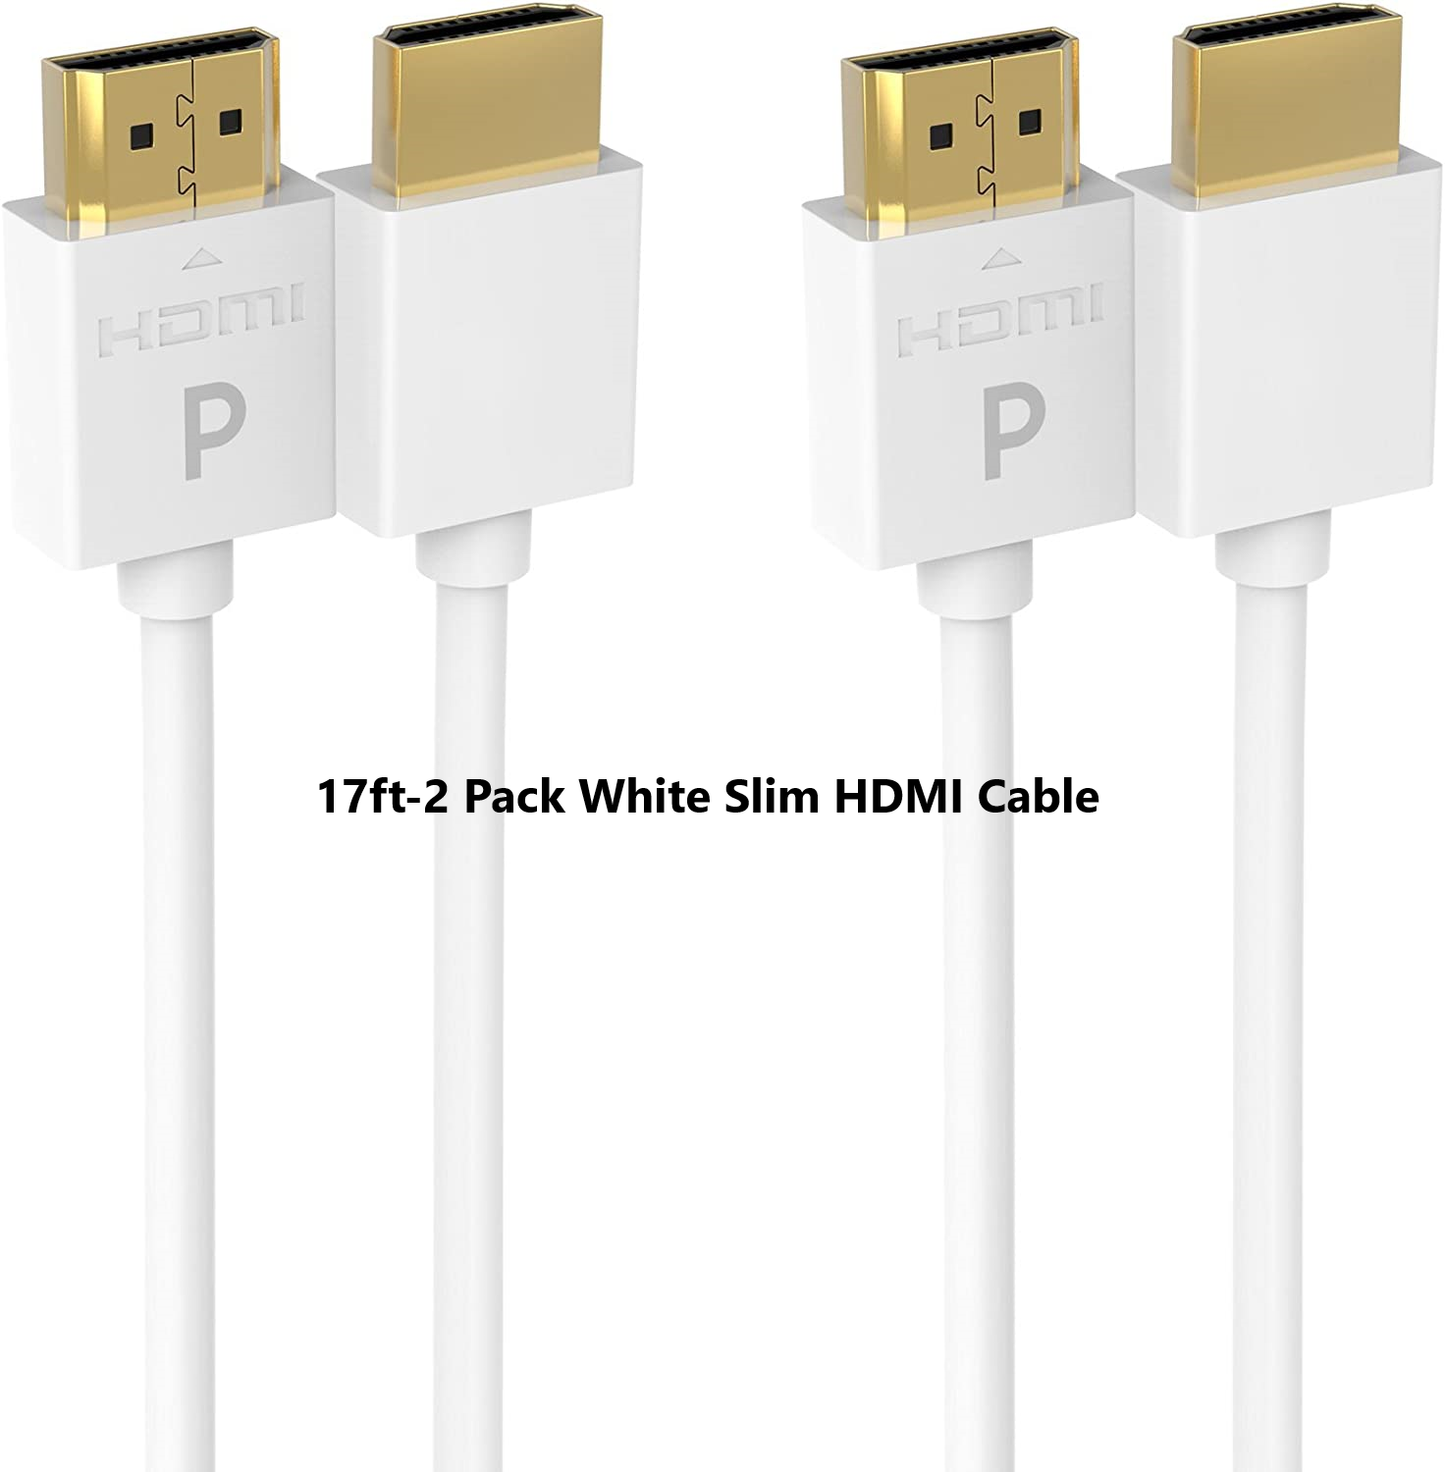 Multiple (Slim HDMI. Fiber optic, HDMI 2.1 Cable) Cables Box